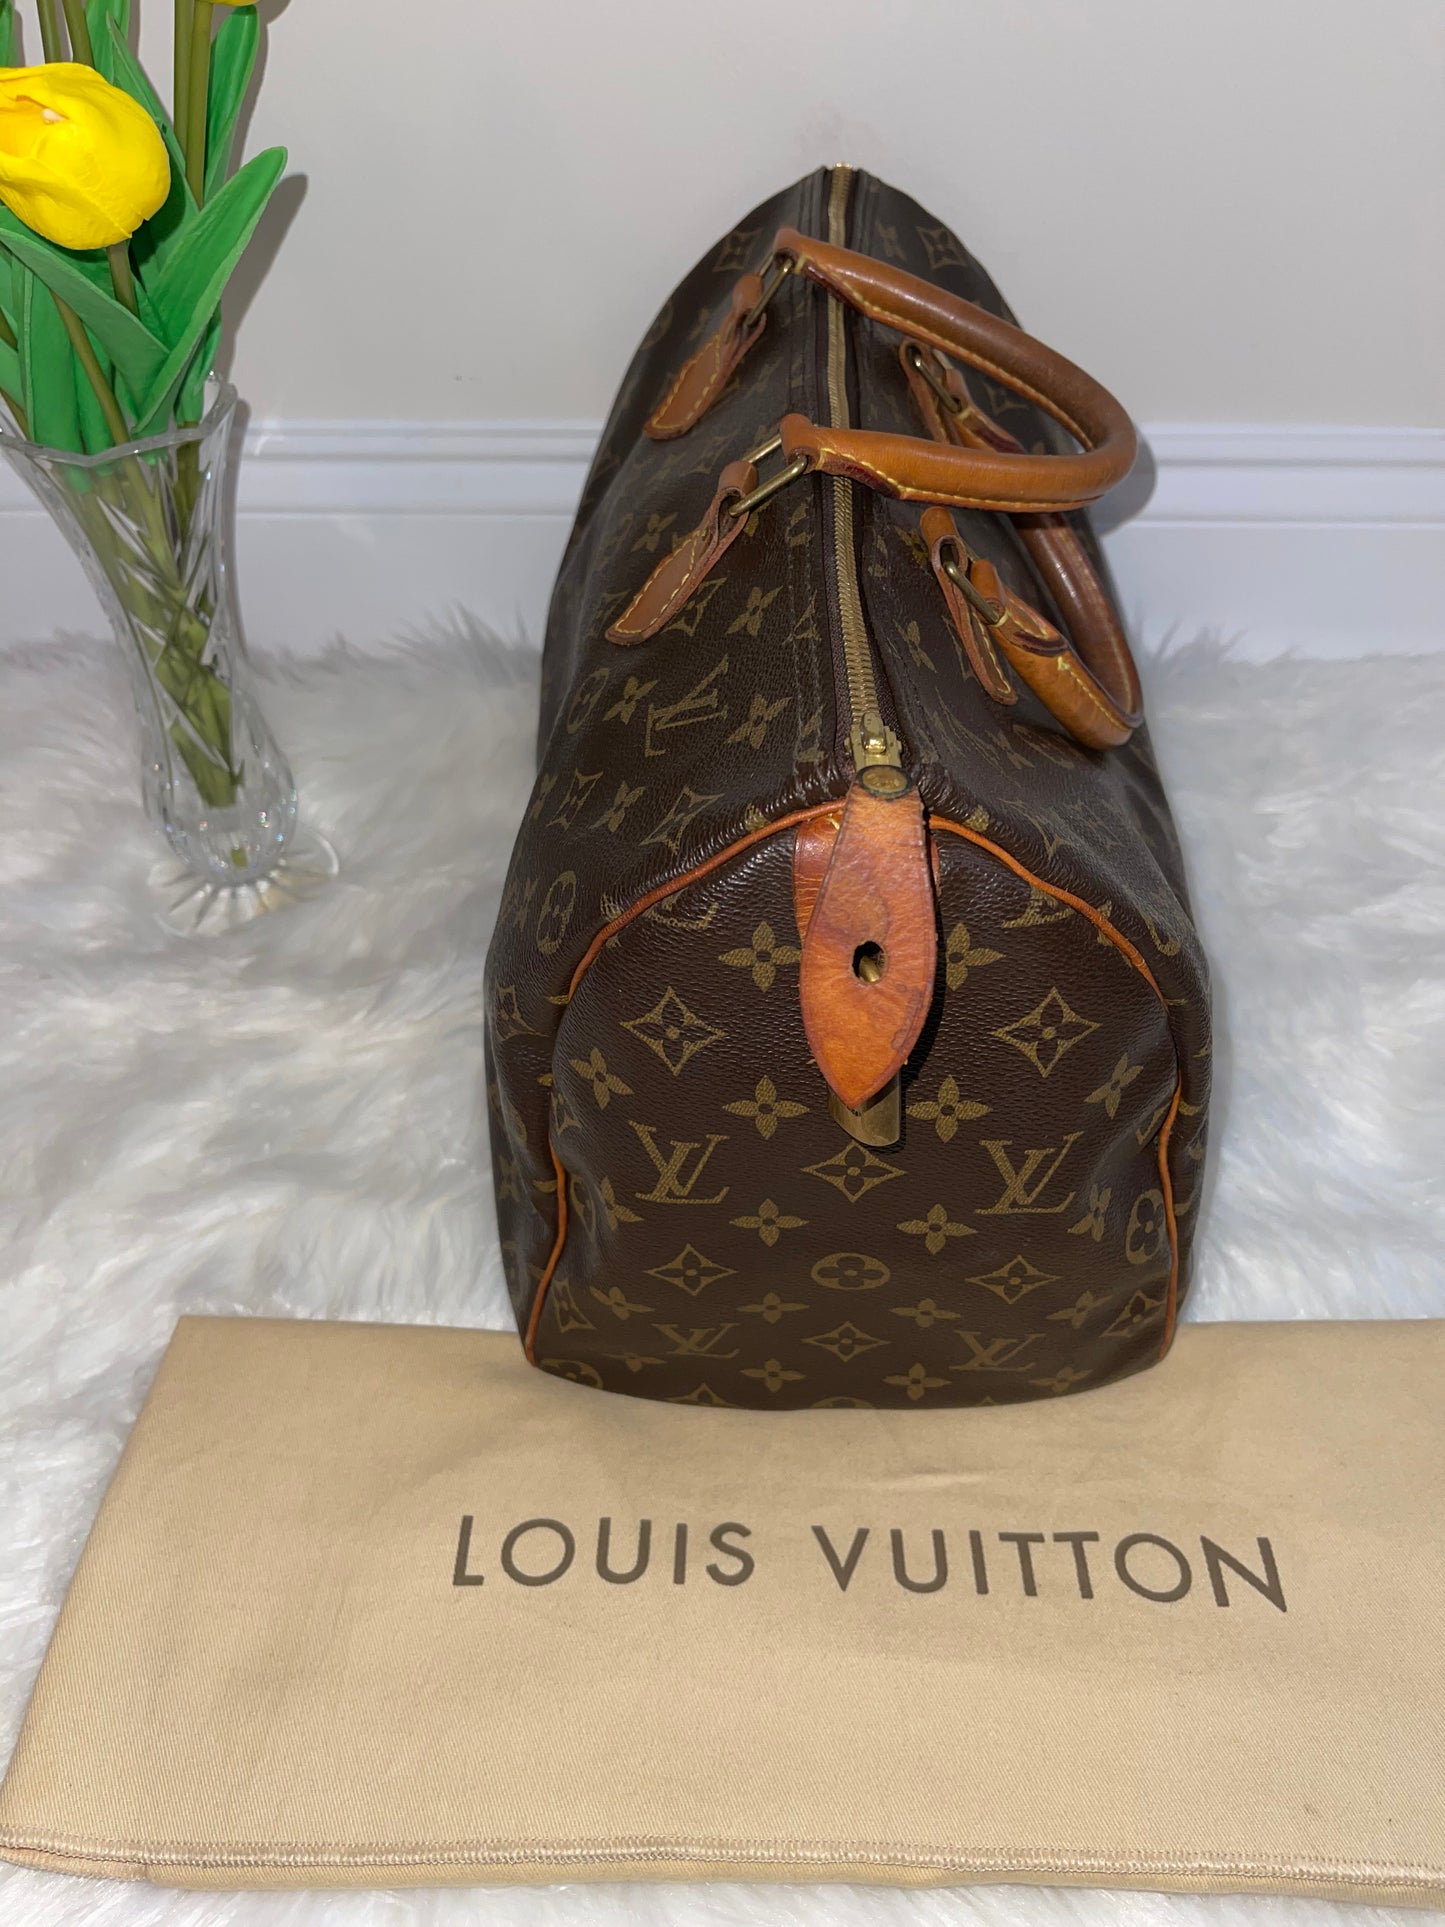 Authentic Vintage Louis Vuitton Speedy 35